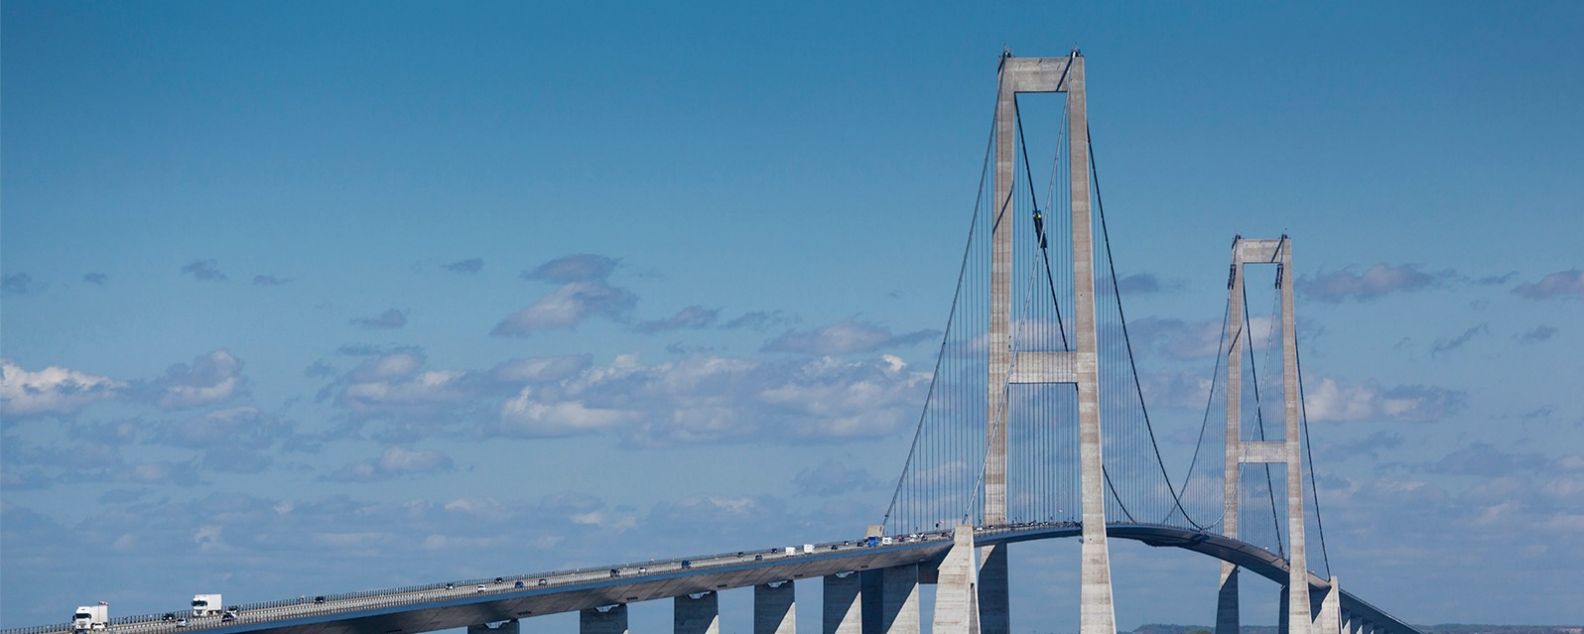 The Danish Great Belt Fixed Link Bridge connects Zealand and Funen